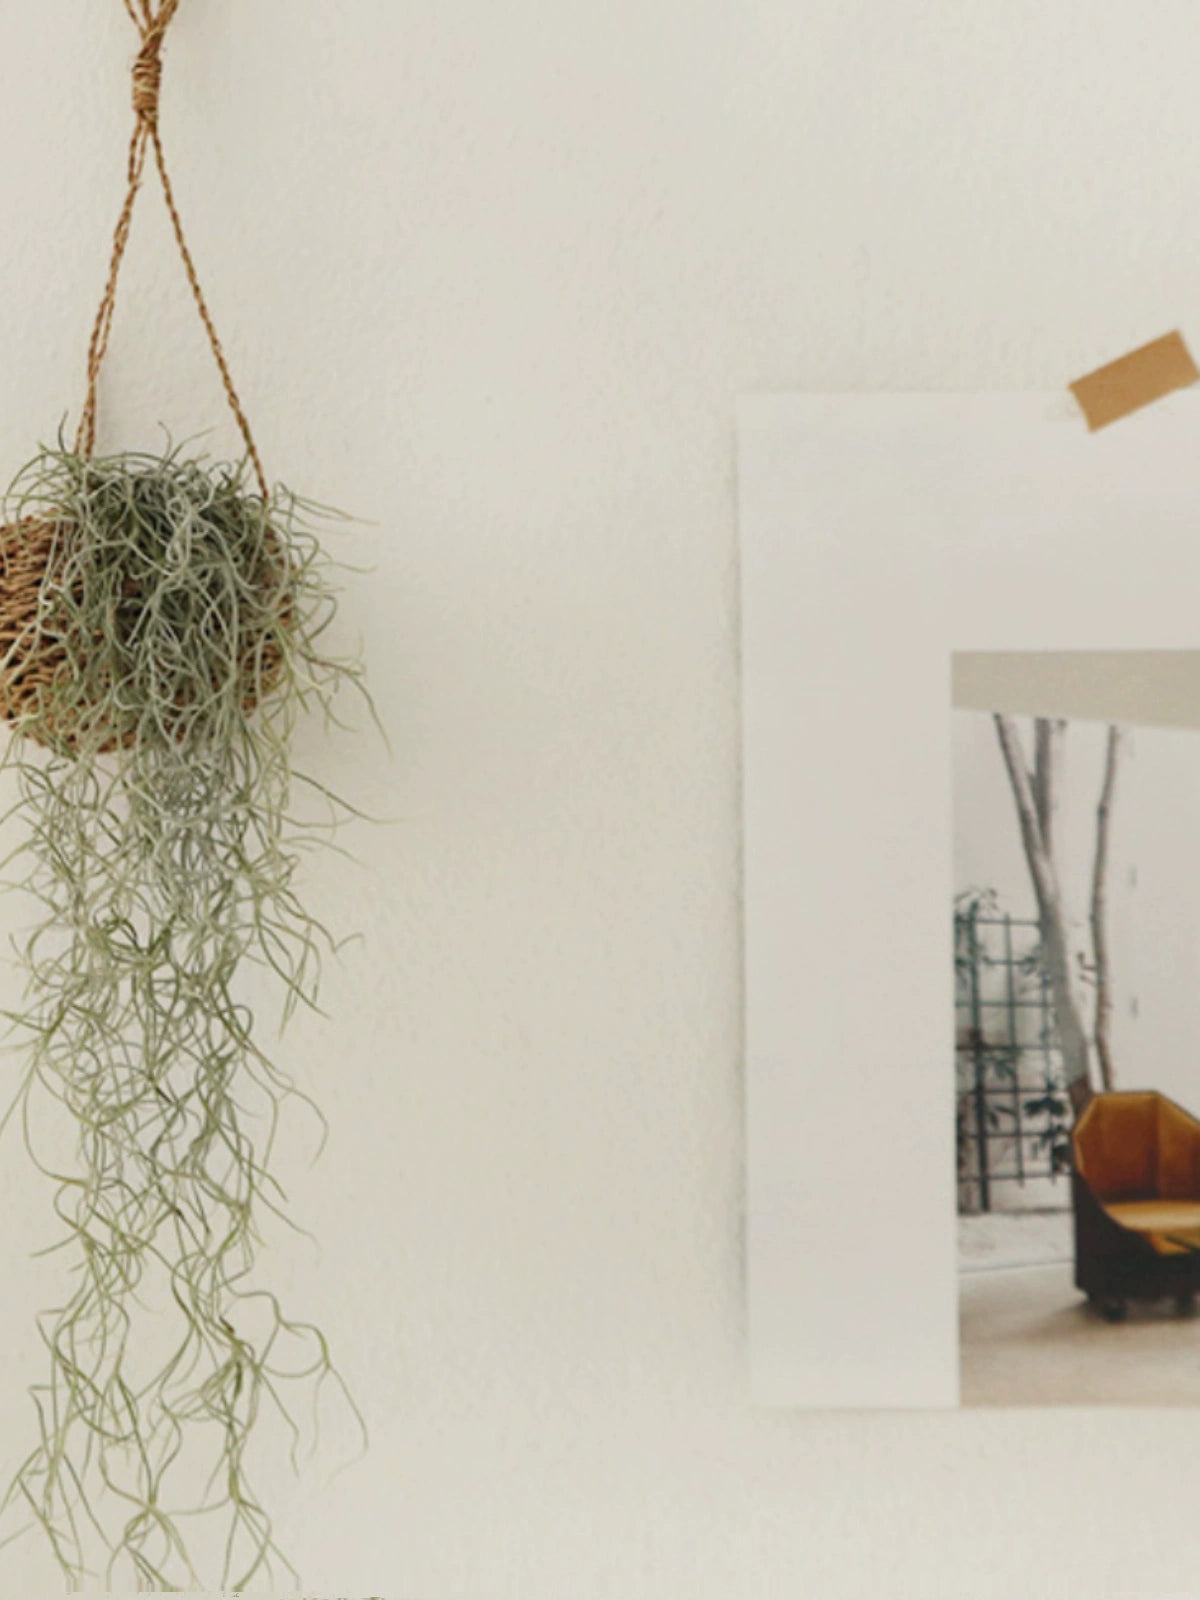 Scandinavian Ins Artificial Green Plant Rattan Cradle with Hooks Flowerpot Tillandsia Tillandsia Usneoides Wall Hanging Decorative Hanging Basket